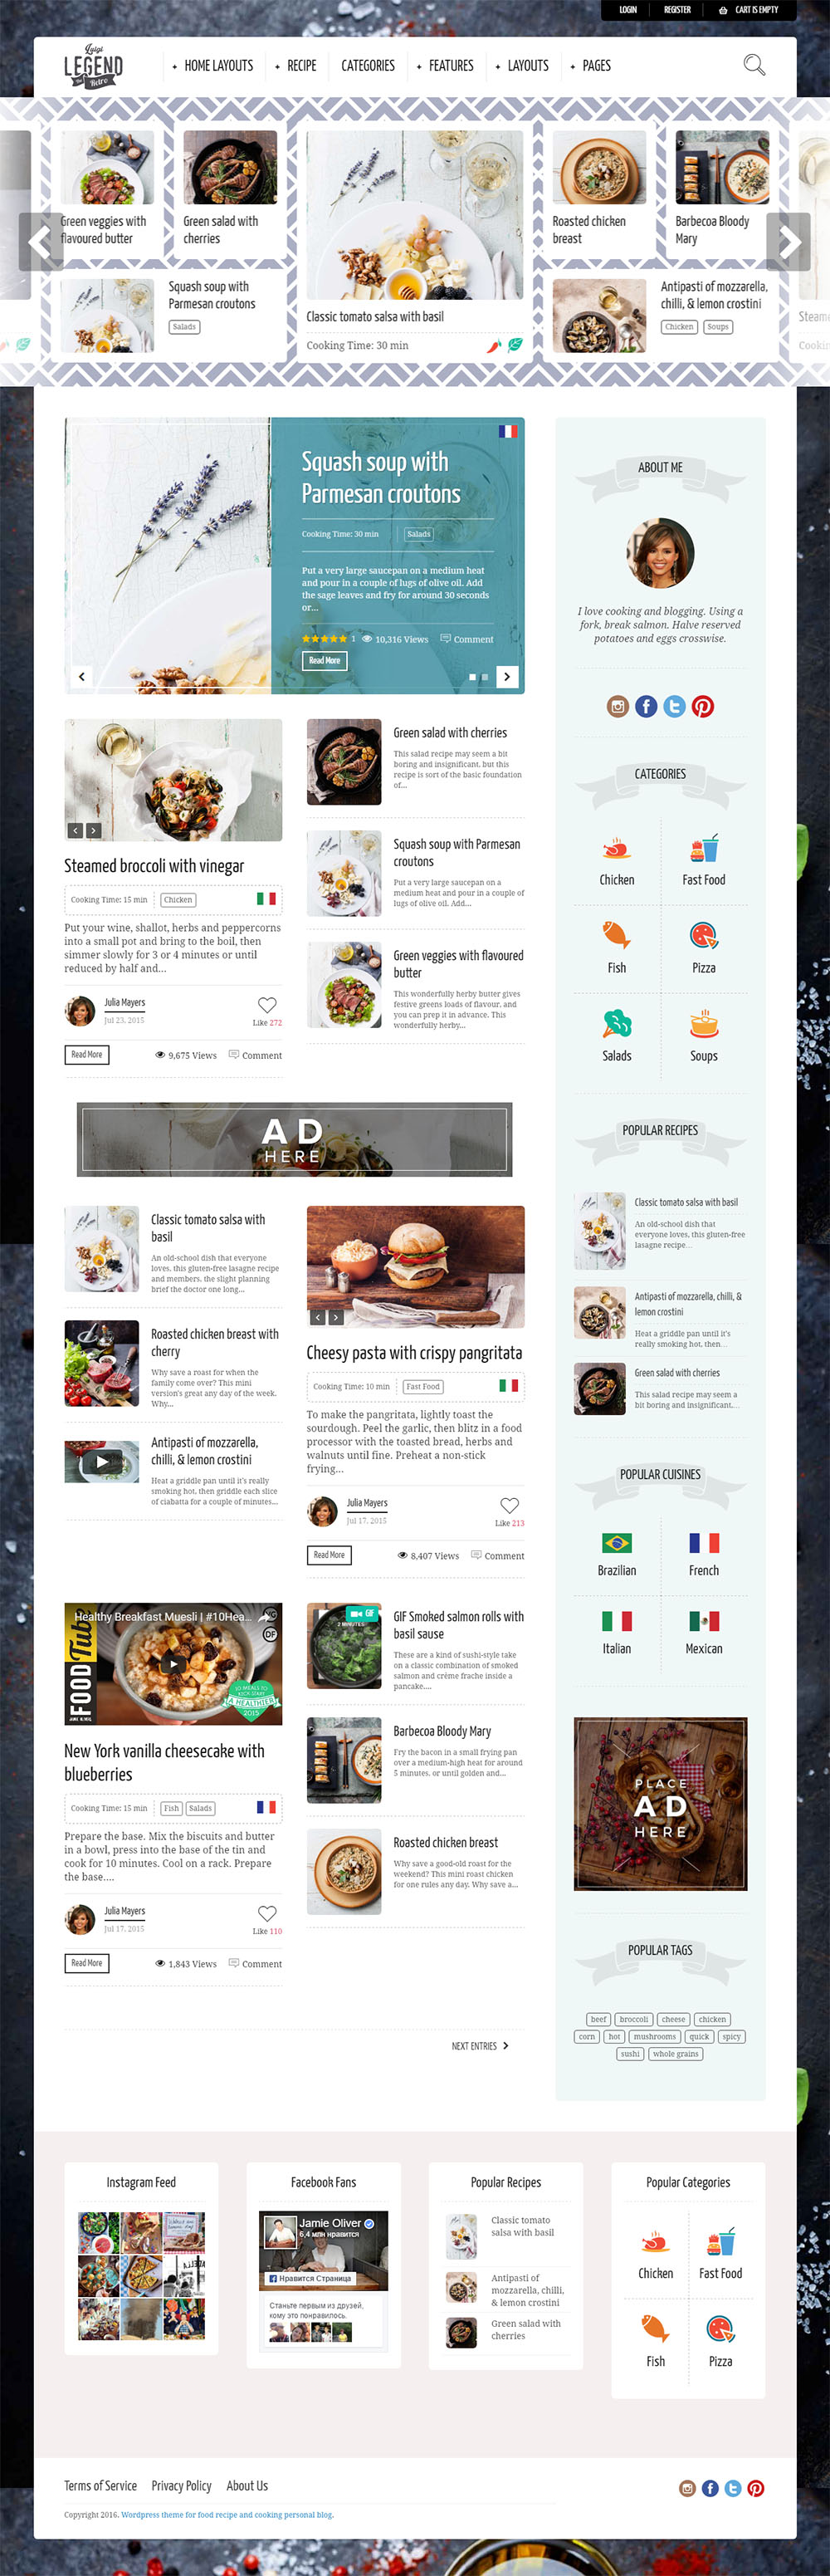 Шаблон сайта кулинарных рецептов, премиум тема Wordpress